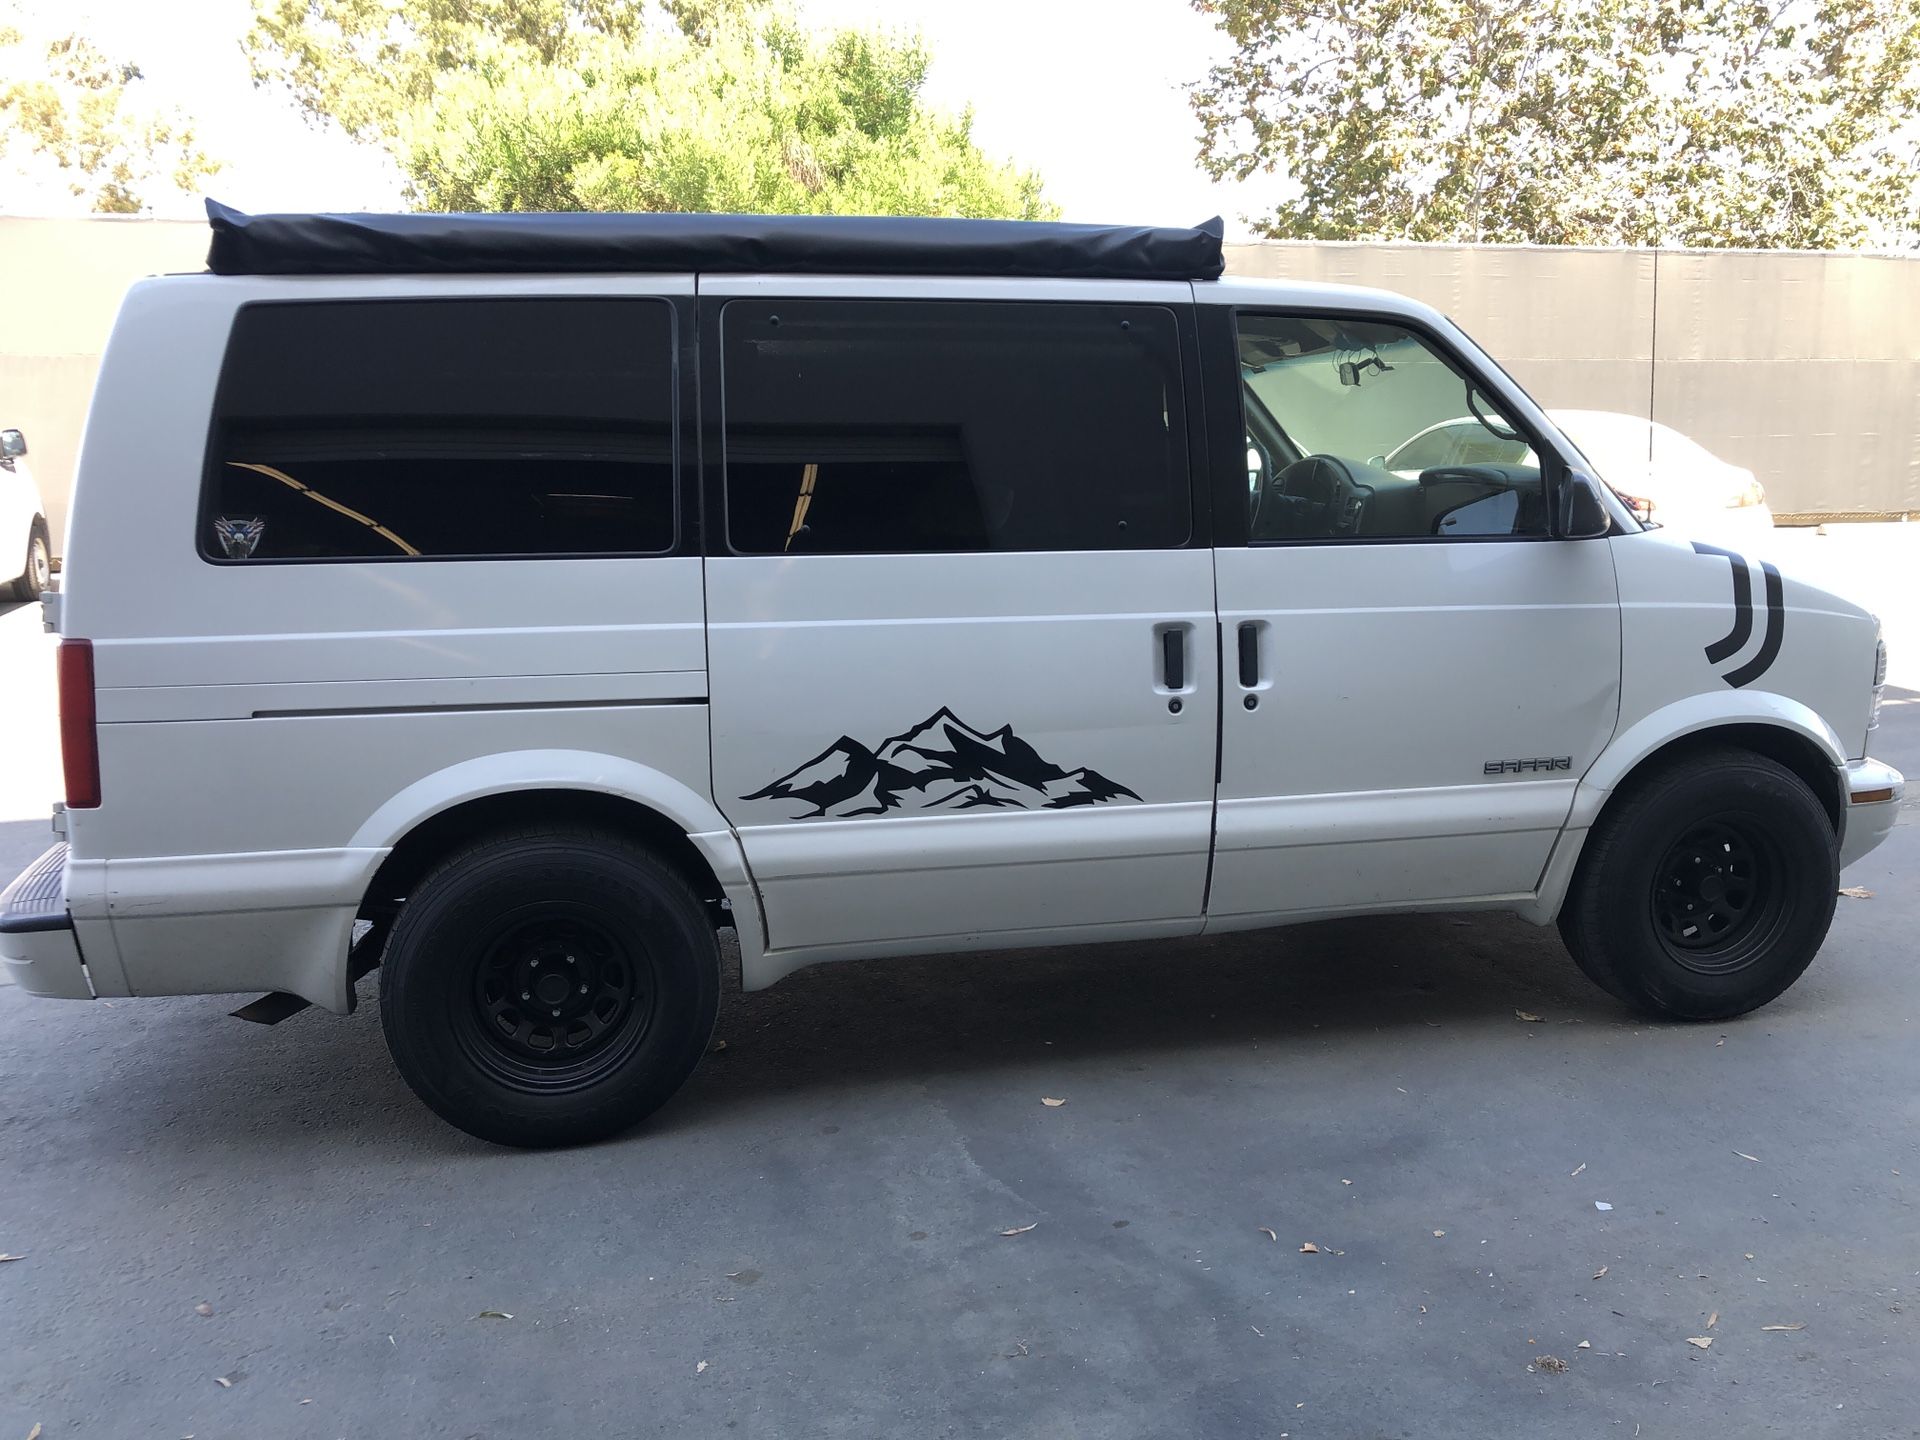 Camper RV conversion GMC Van